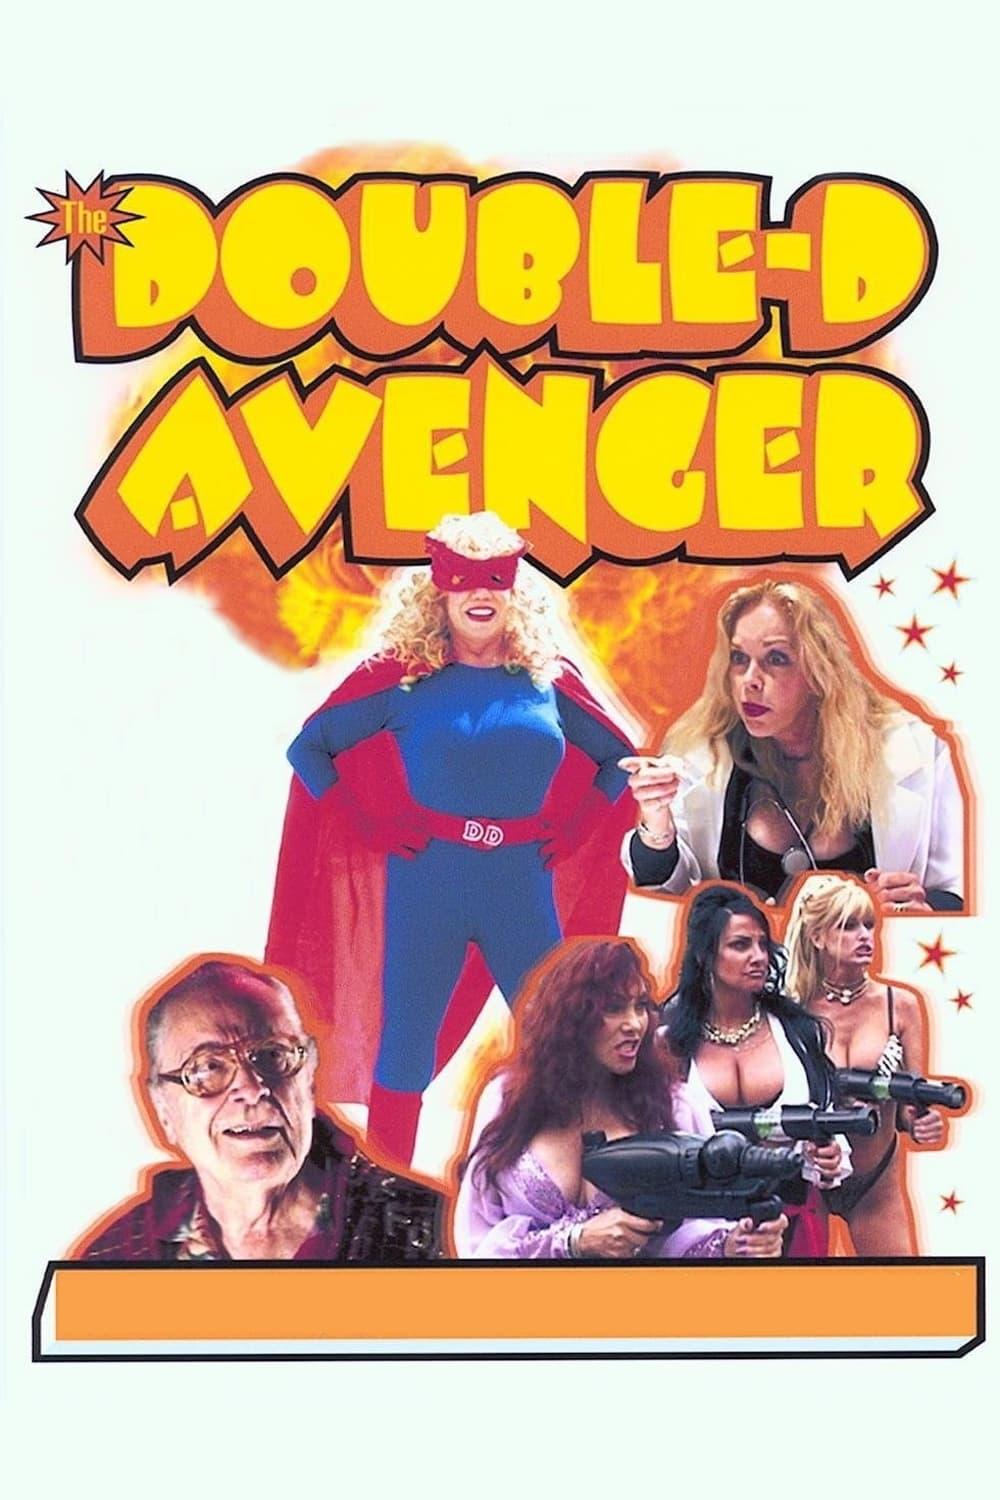 The Double-D Avenger poster